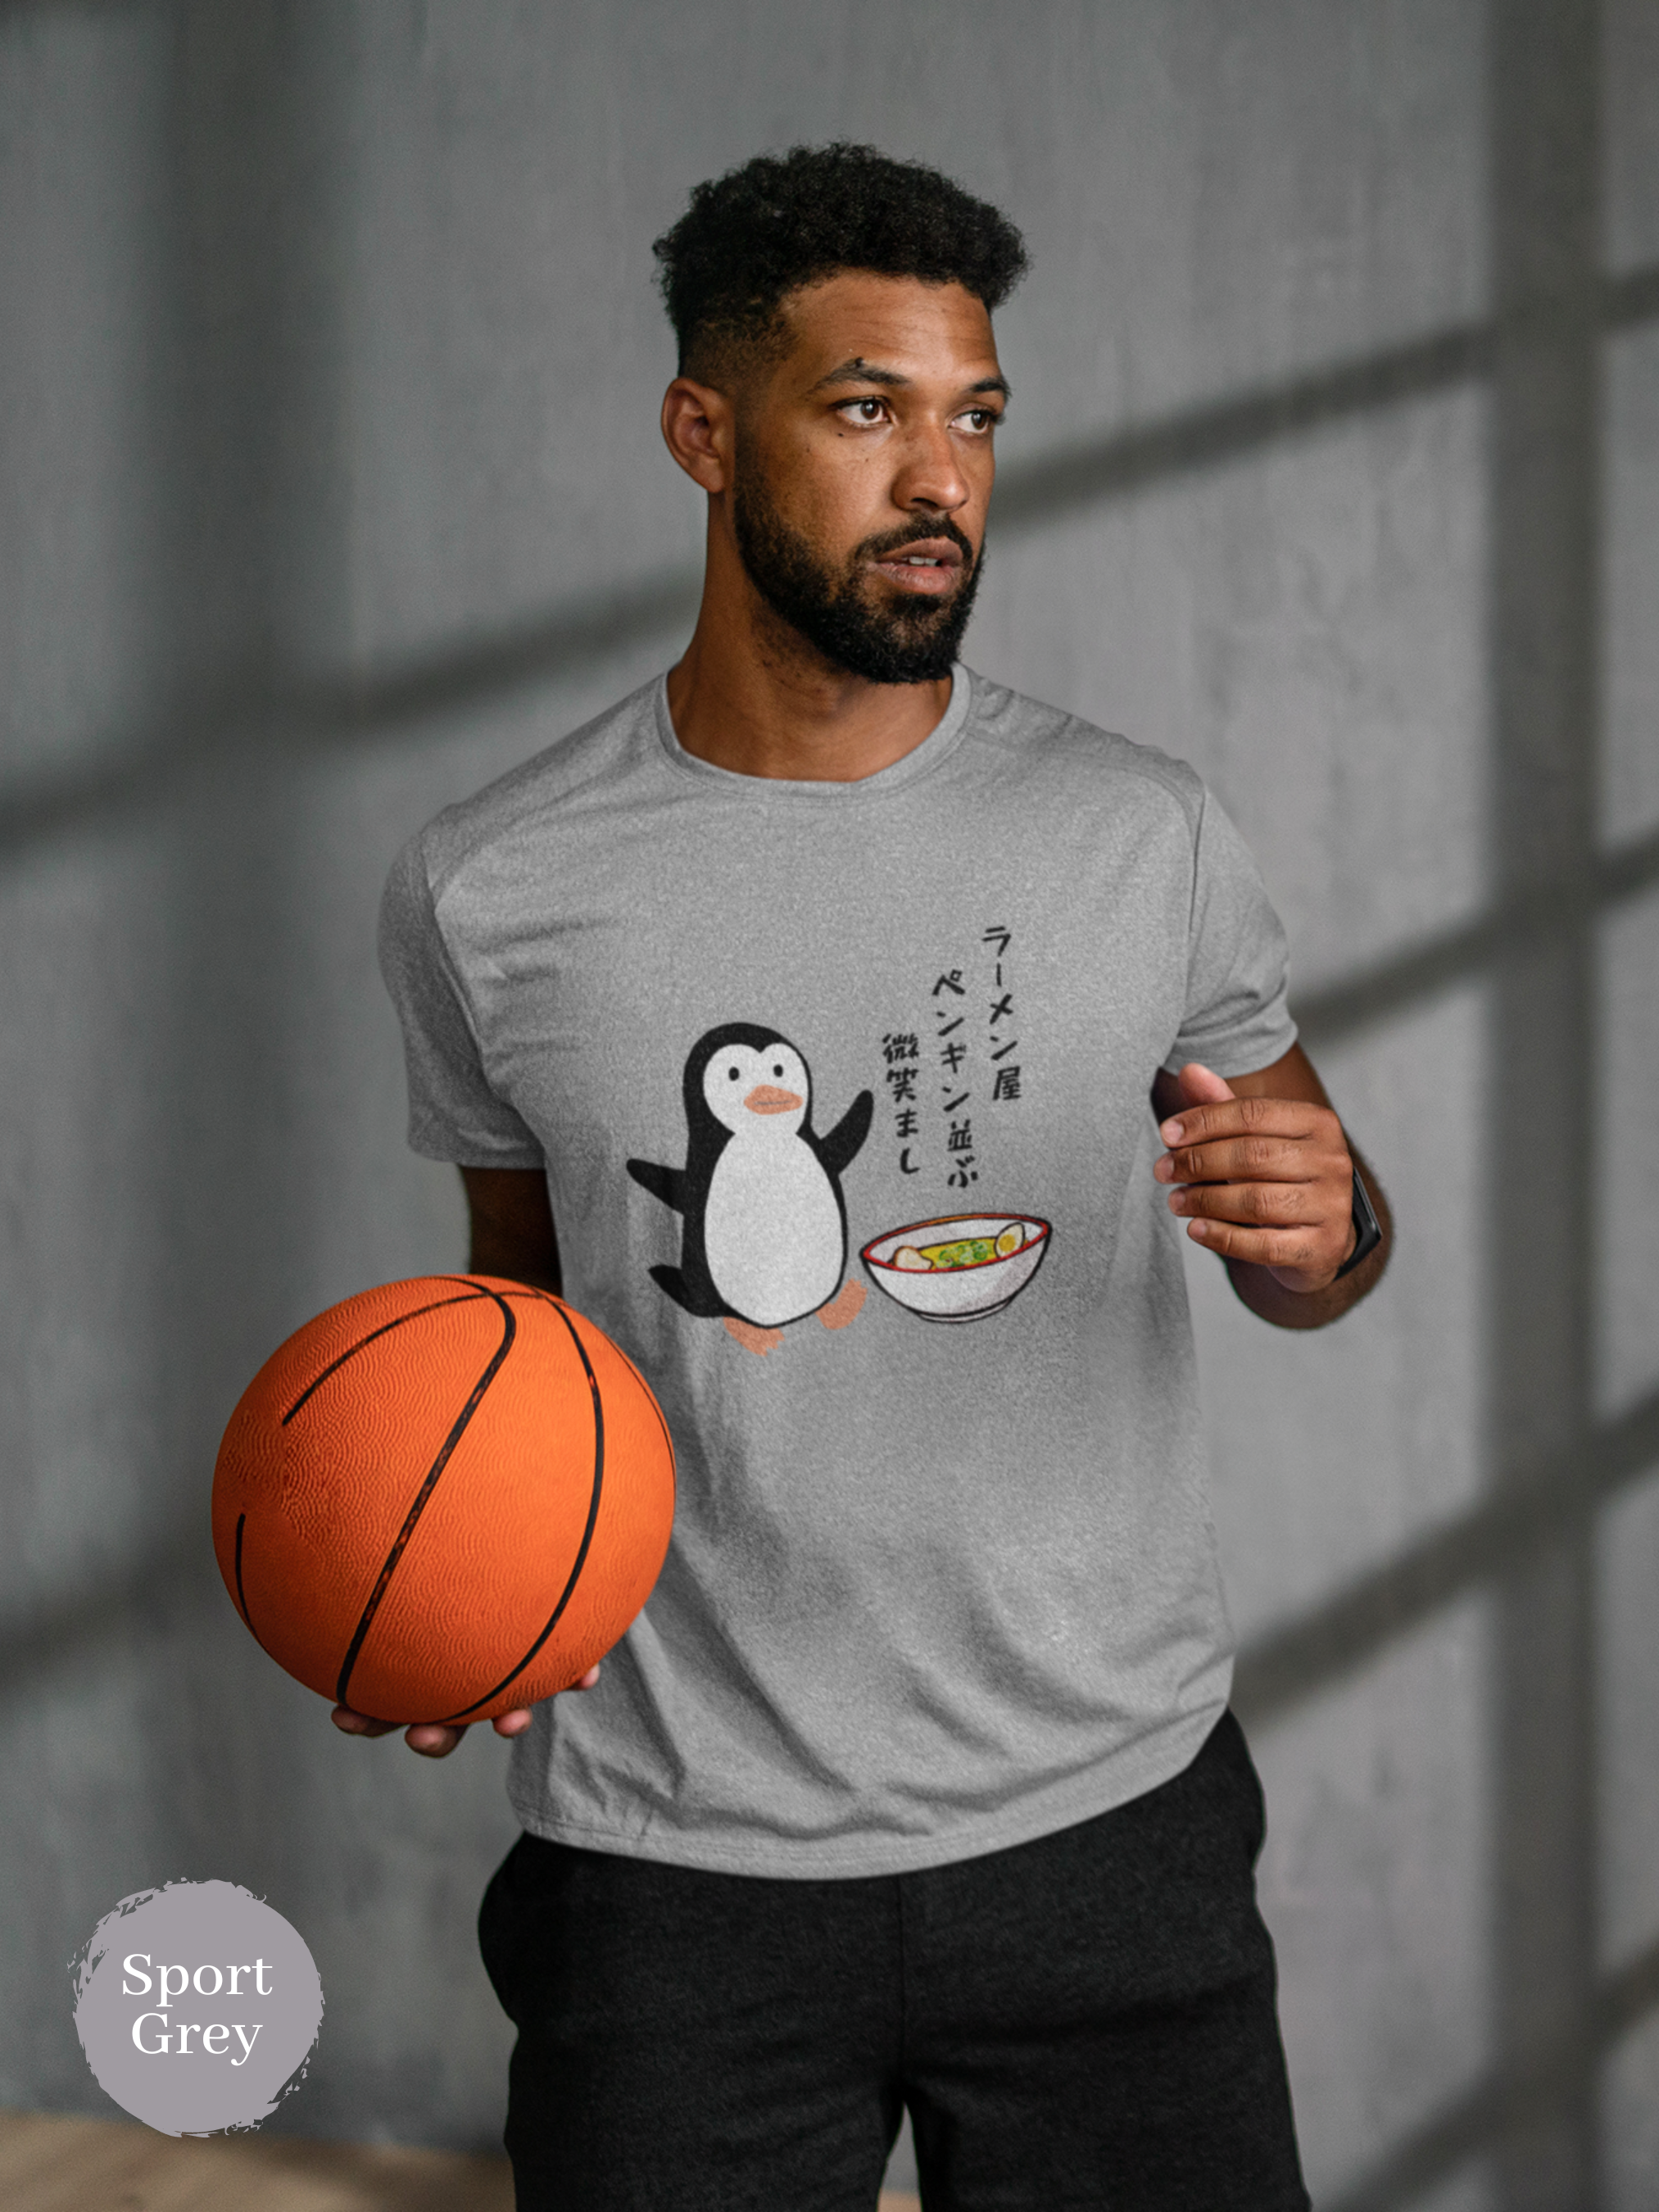 Ramen T-shirt: Whimsical Penguins and Delightful Ramen Art - A Haiku-Inspired Japanese Foodie Shirt